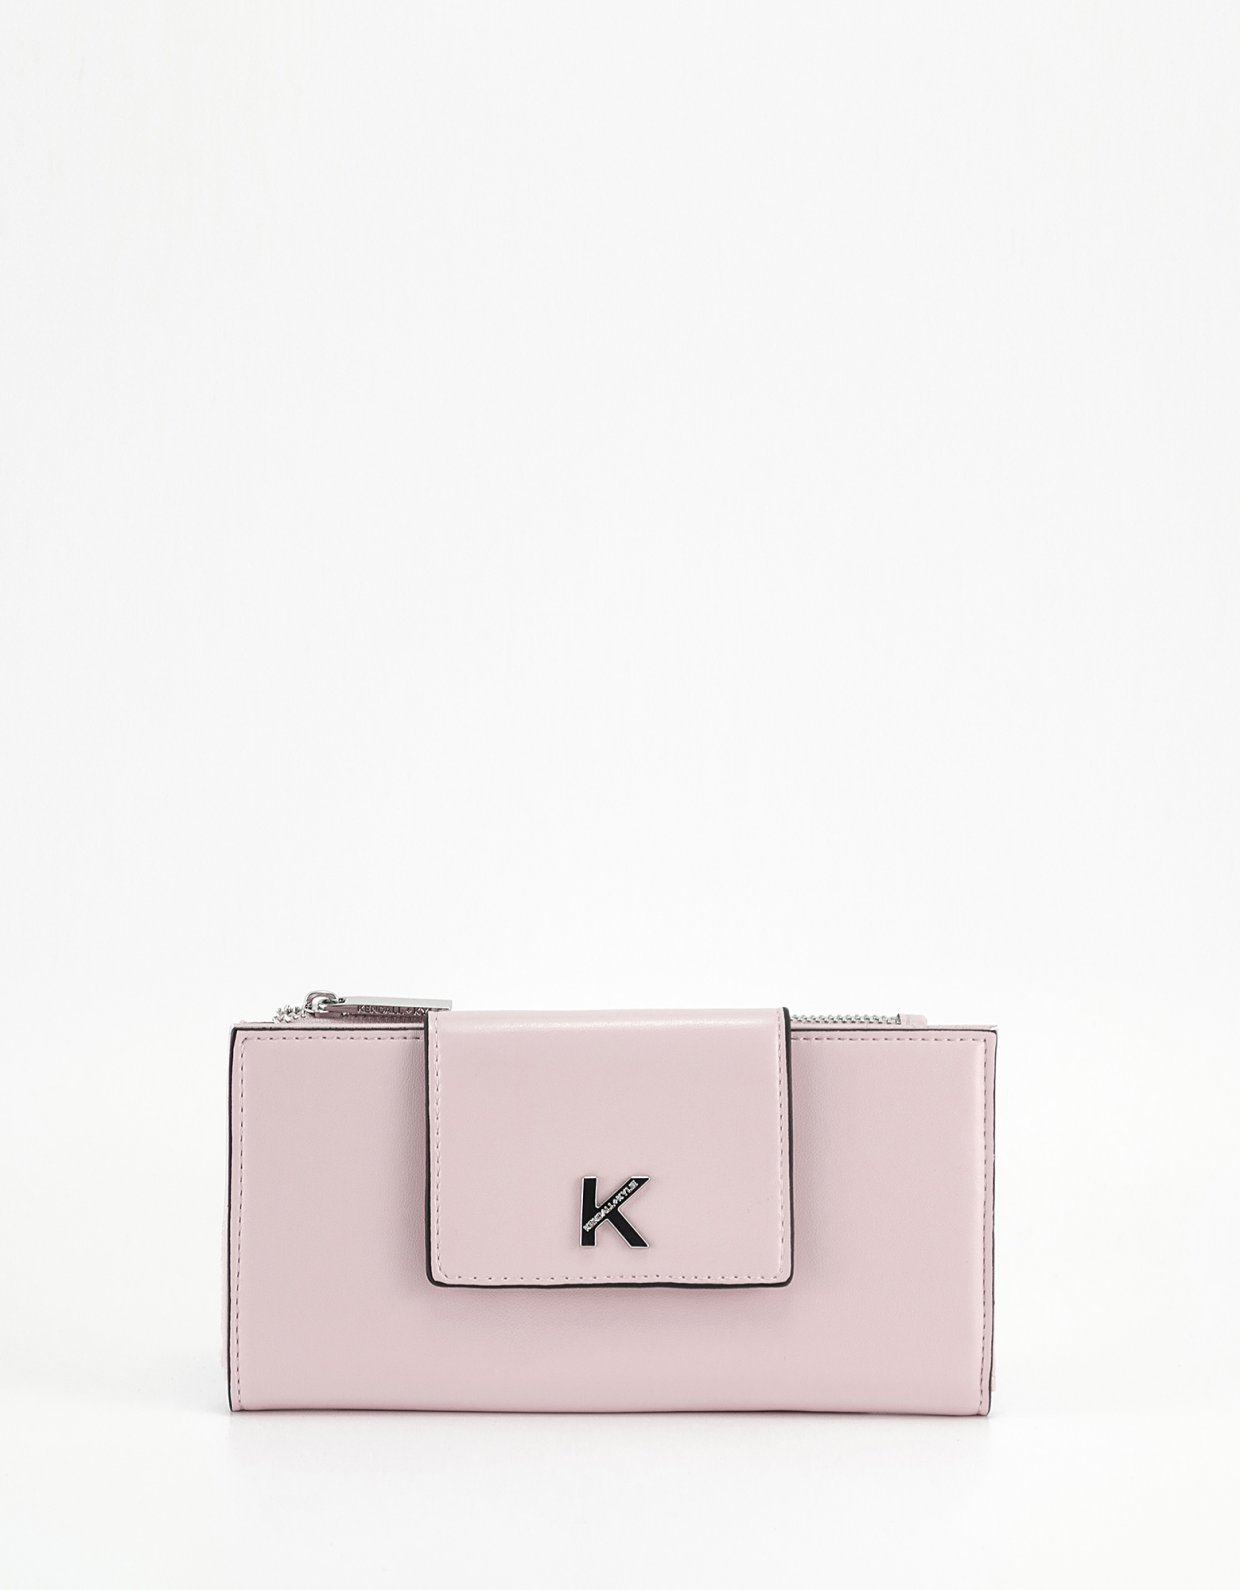 Kendall + Kylie Malibu wallet crossbody blush